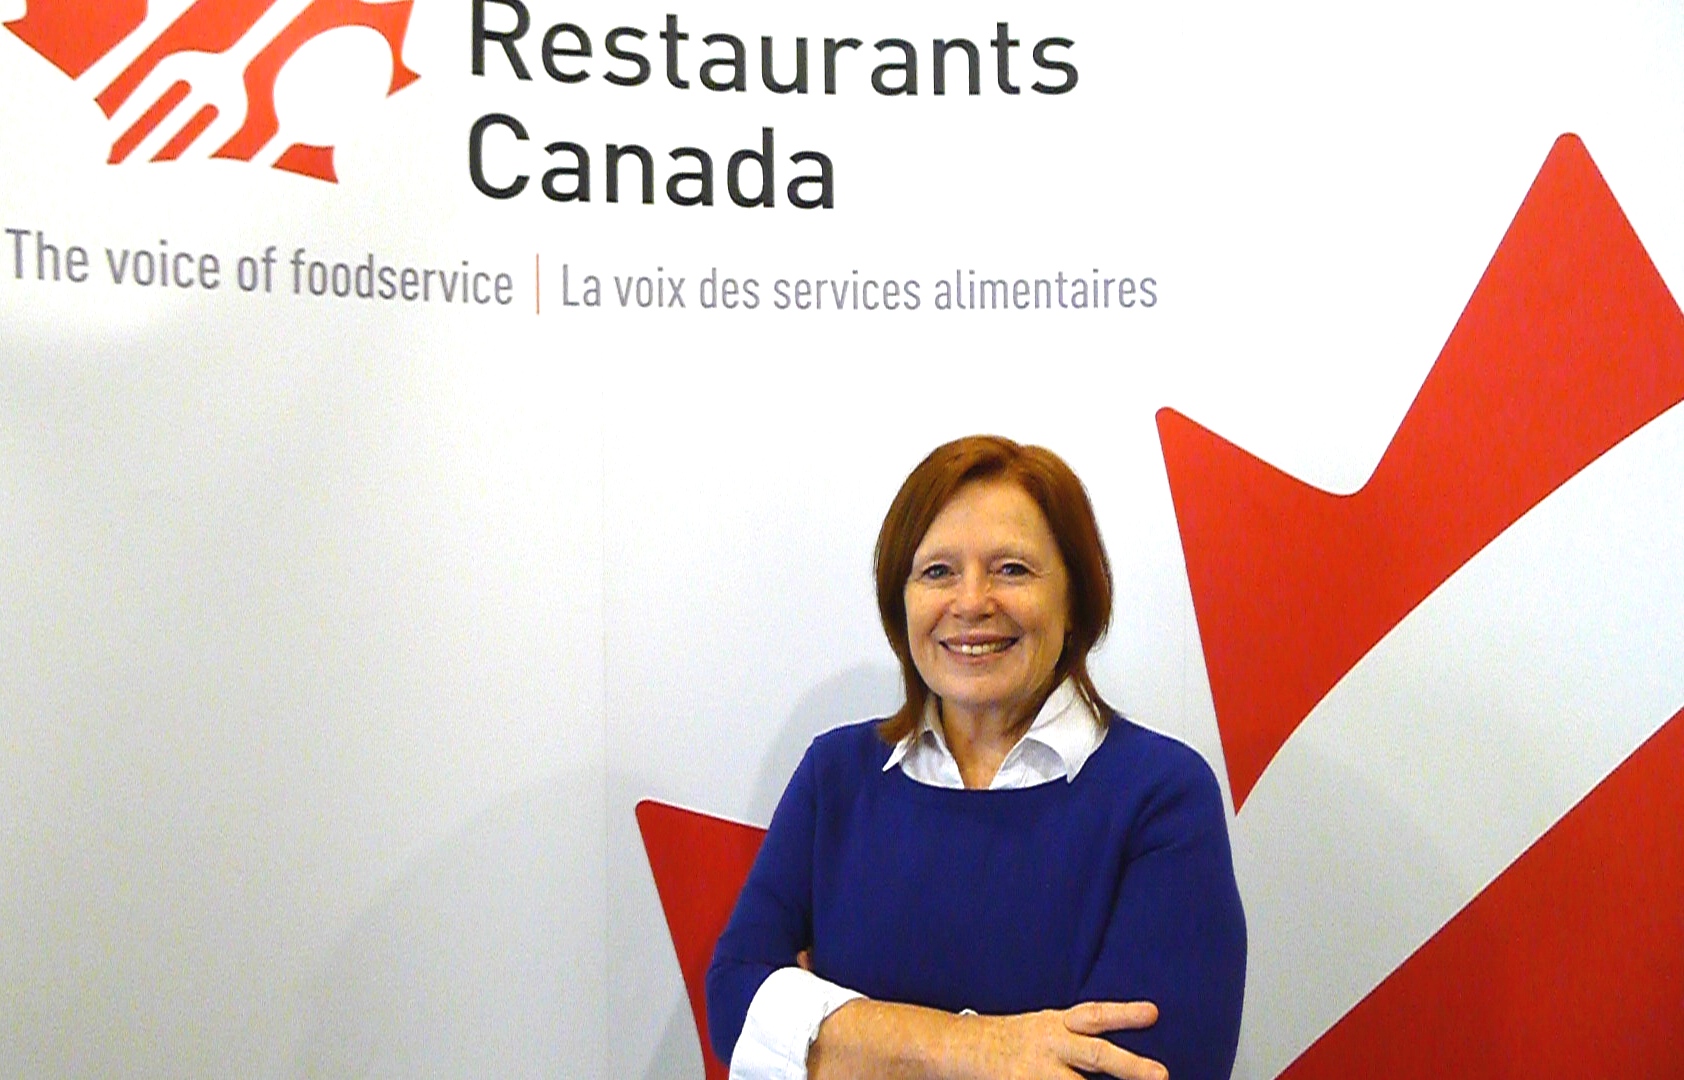 The Evolution Of Restaurants Canada